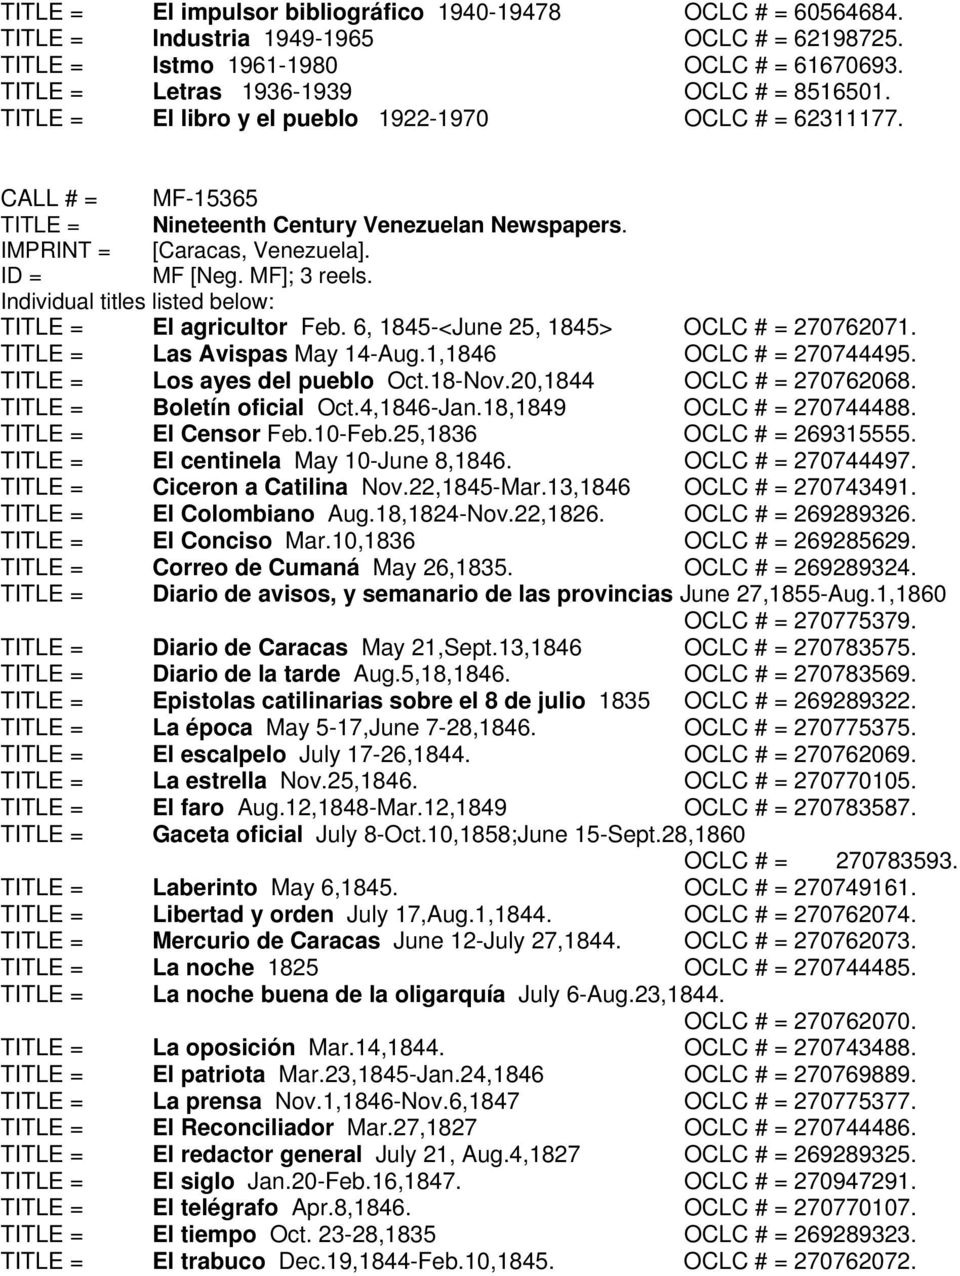 6, 1845-<June 25, 1845> OCLC # = 270762071. Las Avispas May 14-Aug.1,1846 OCLC # = 270744495. Los ayes del pueblo Oct.18-Nov.20,1844 OCLC # = 270762068. Boletín oficial Oct.4,1846-Jan.